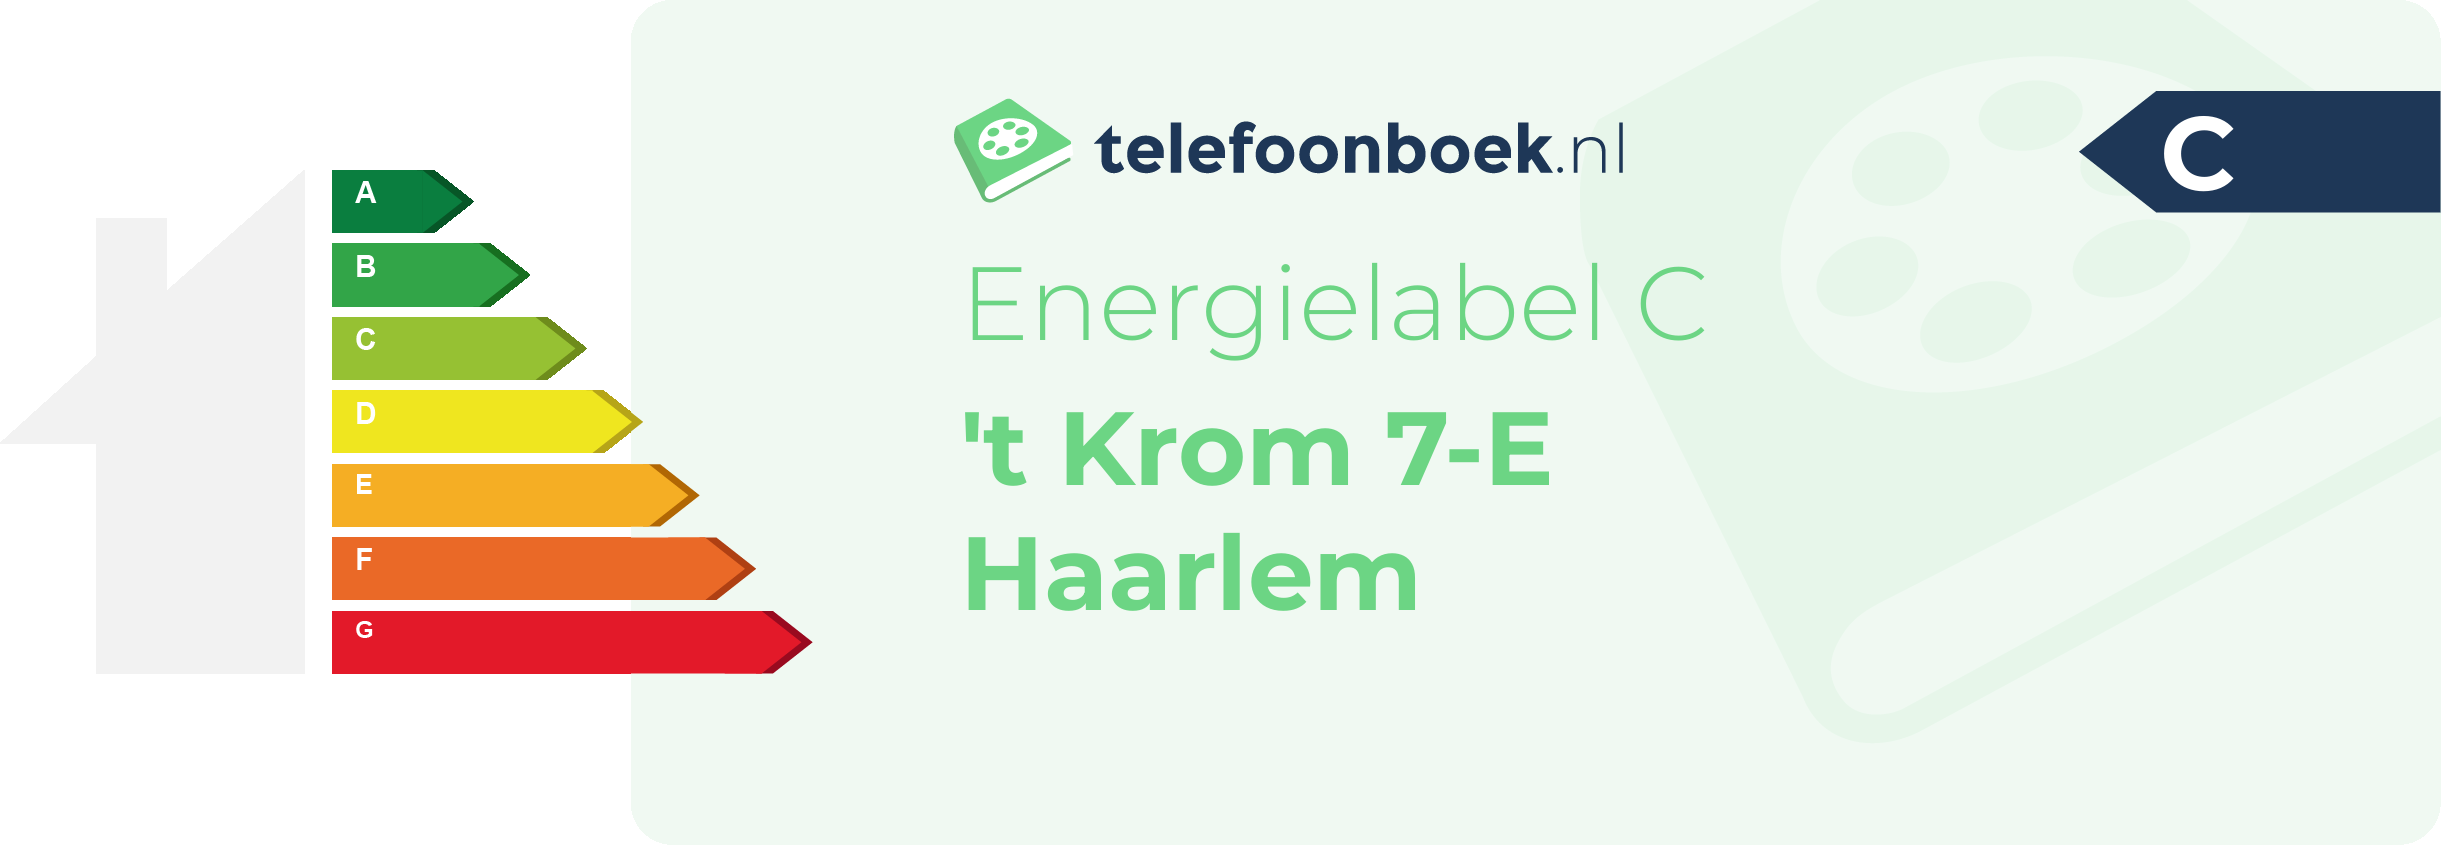 Energielabel 't Krom 7-E Haarlem